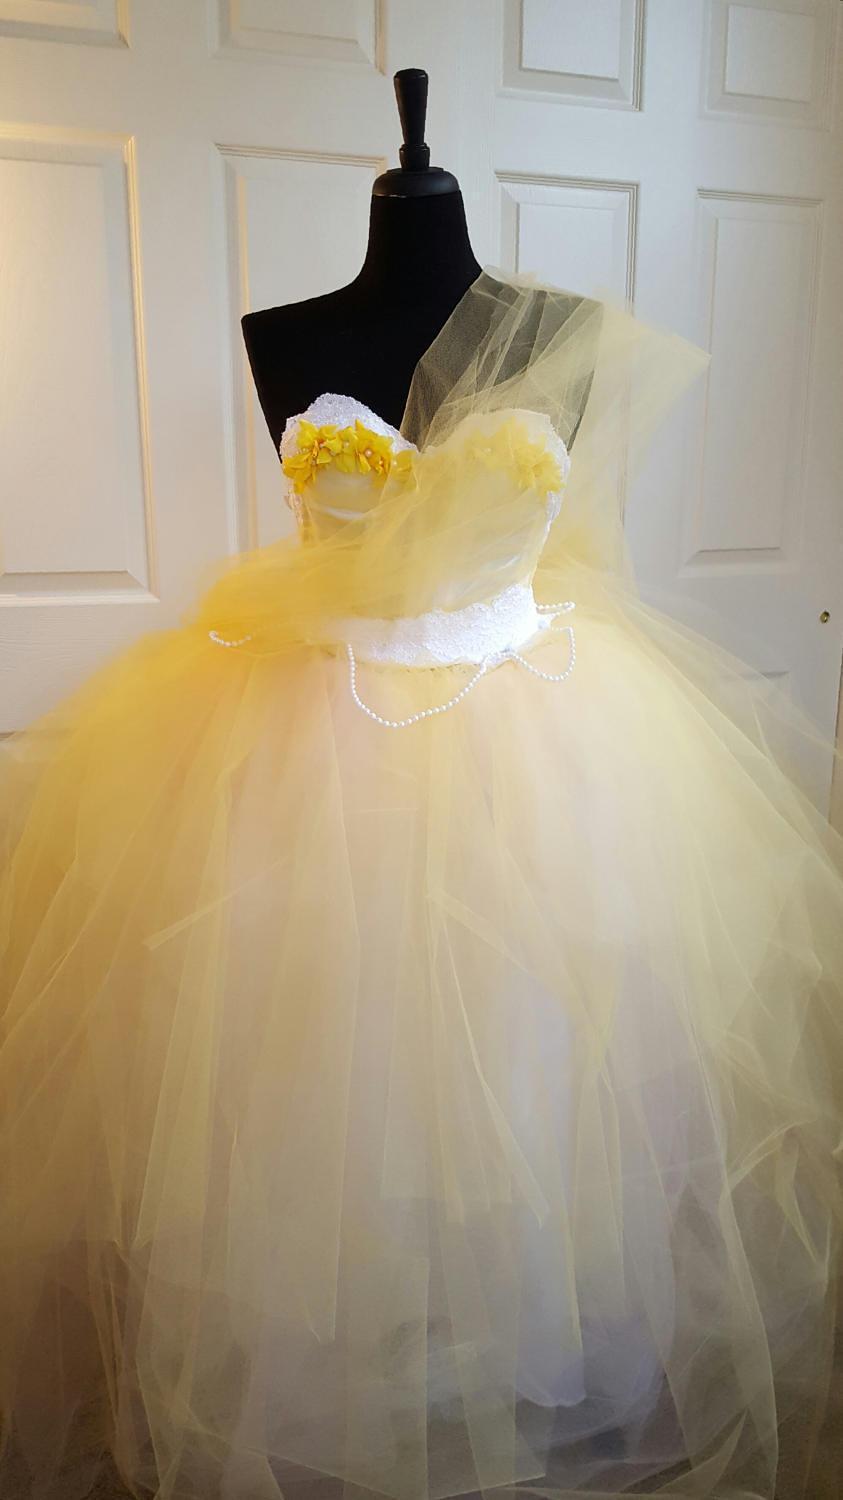 زفاف - Sample Gown / Yellow And White Lace Tulle Corset Lehenga Saree Sari Bridal Wedding Ball Gown Party Costume Quinceanera Prom